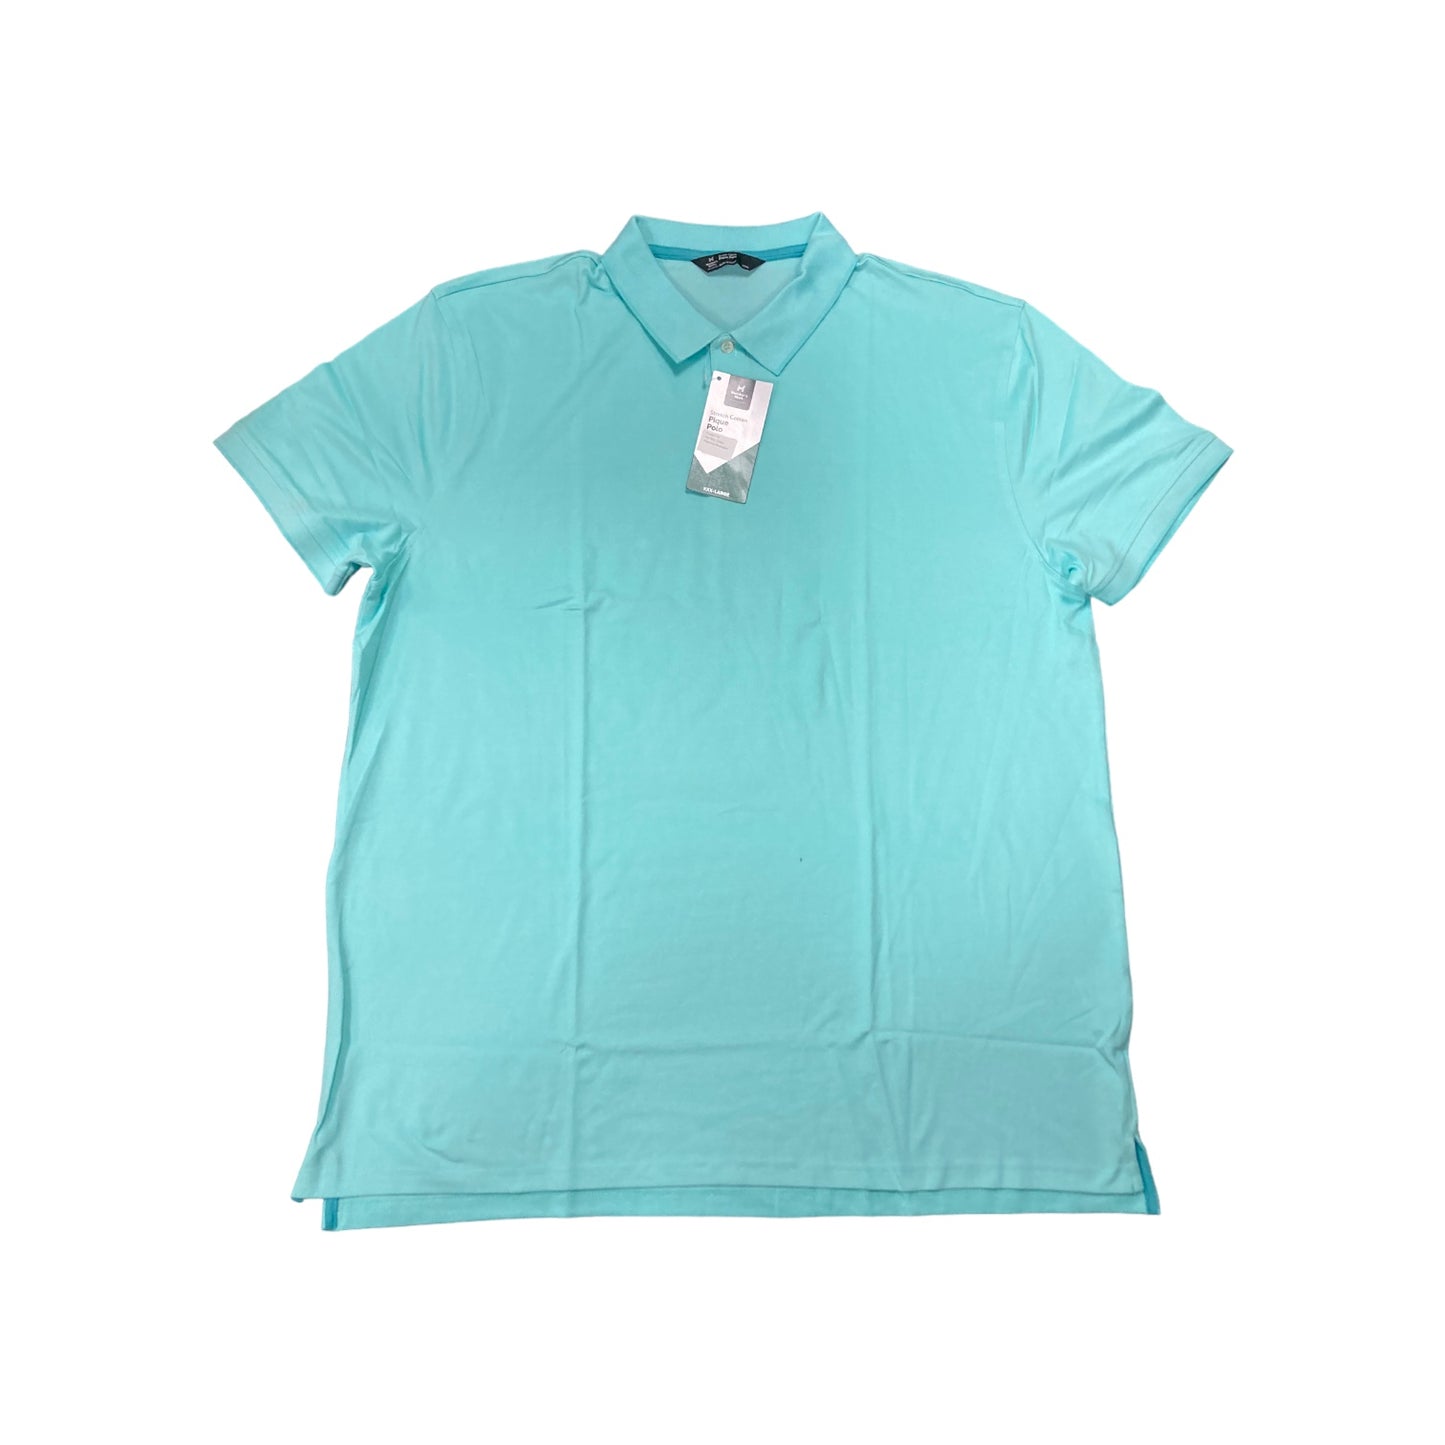 Member's Mark Men's Short Sleeve Stretch Cotton Pique Polo Shirt